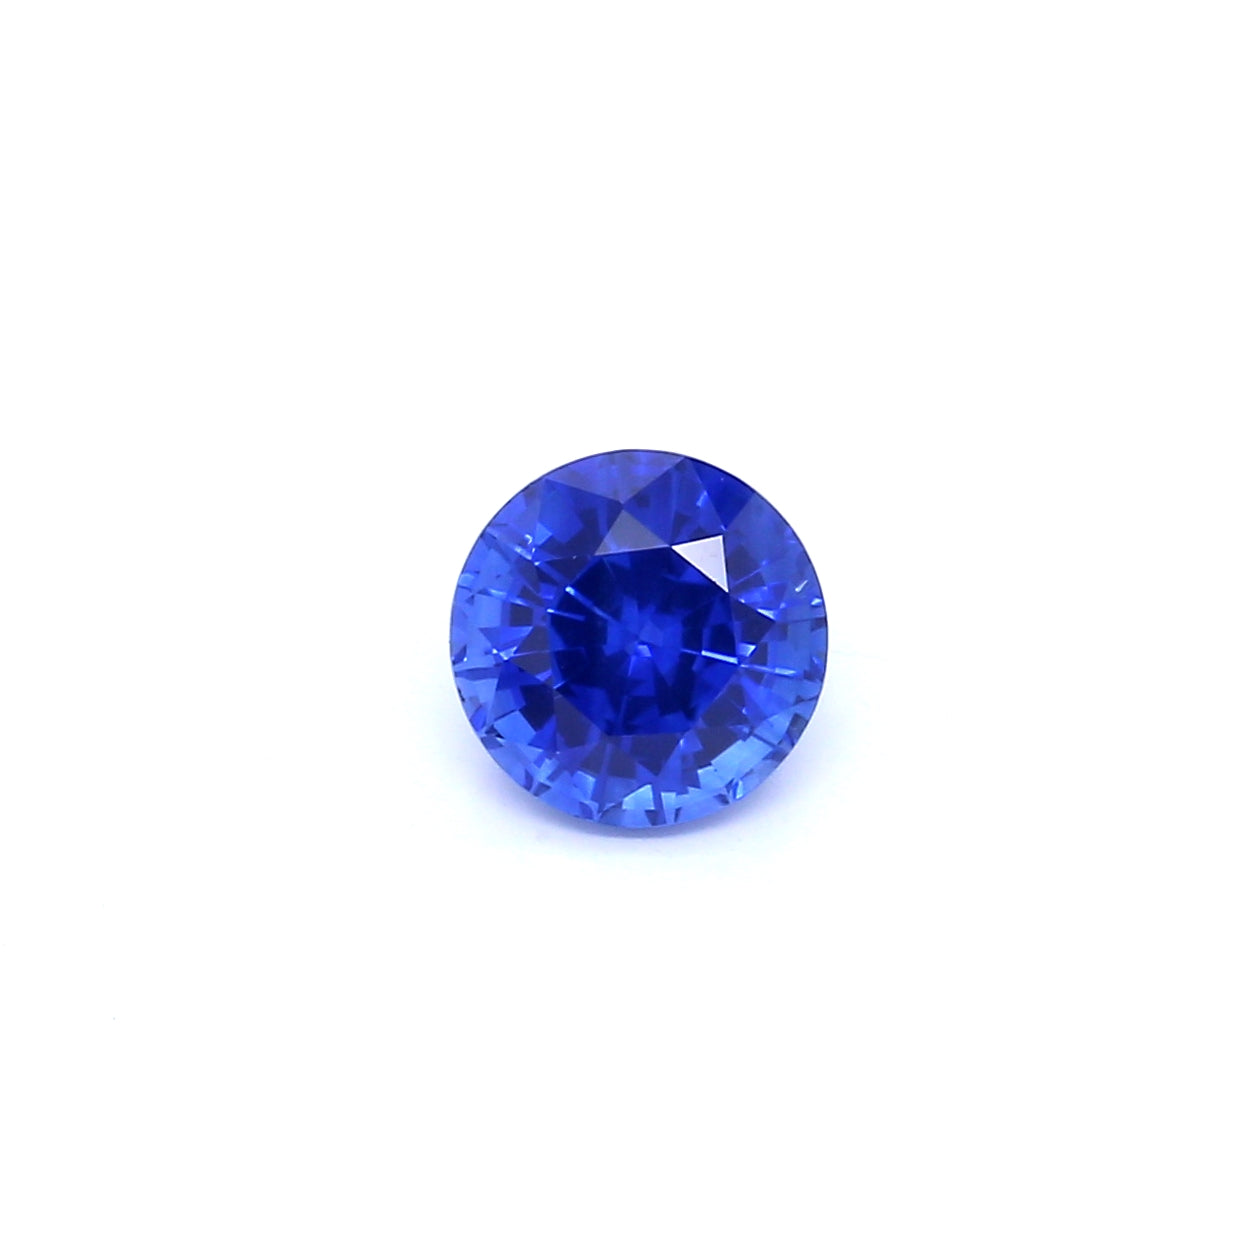 1.33ct Round Sapphire, Heated, Sri Lanka - 6.40 x 6.43 x 4.34mm